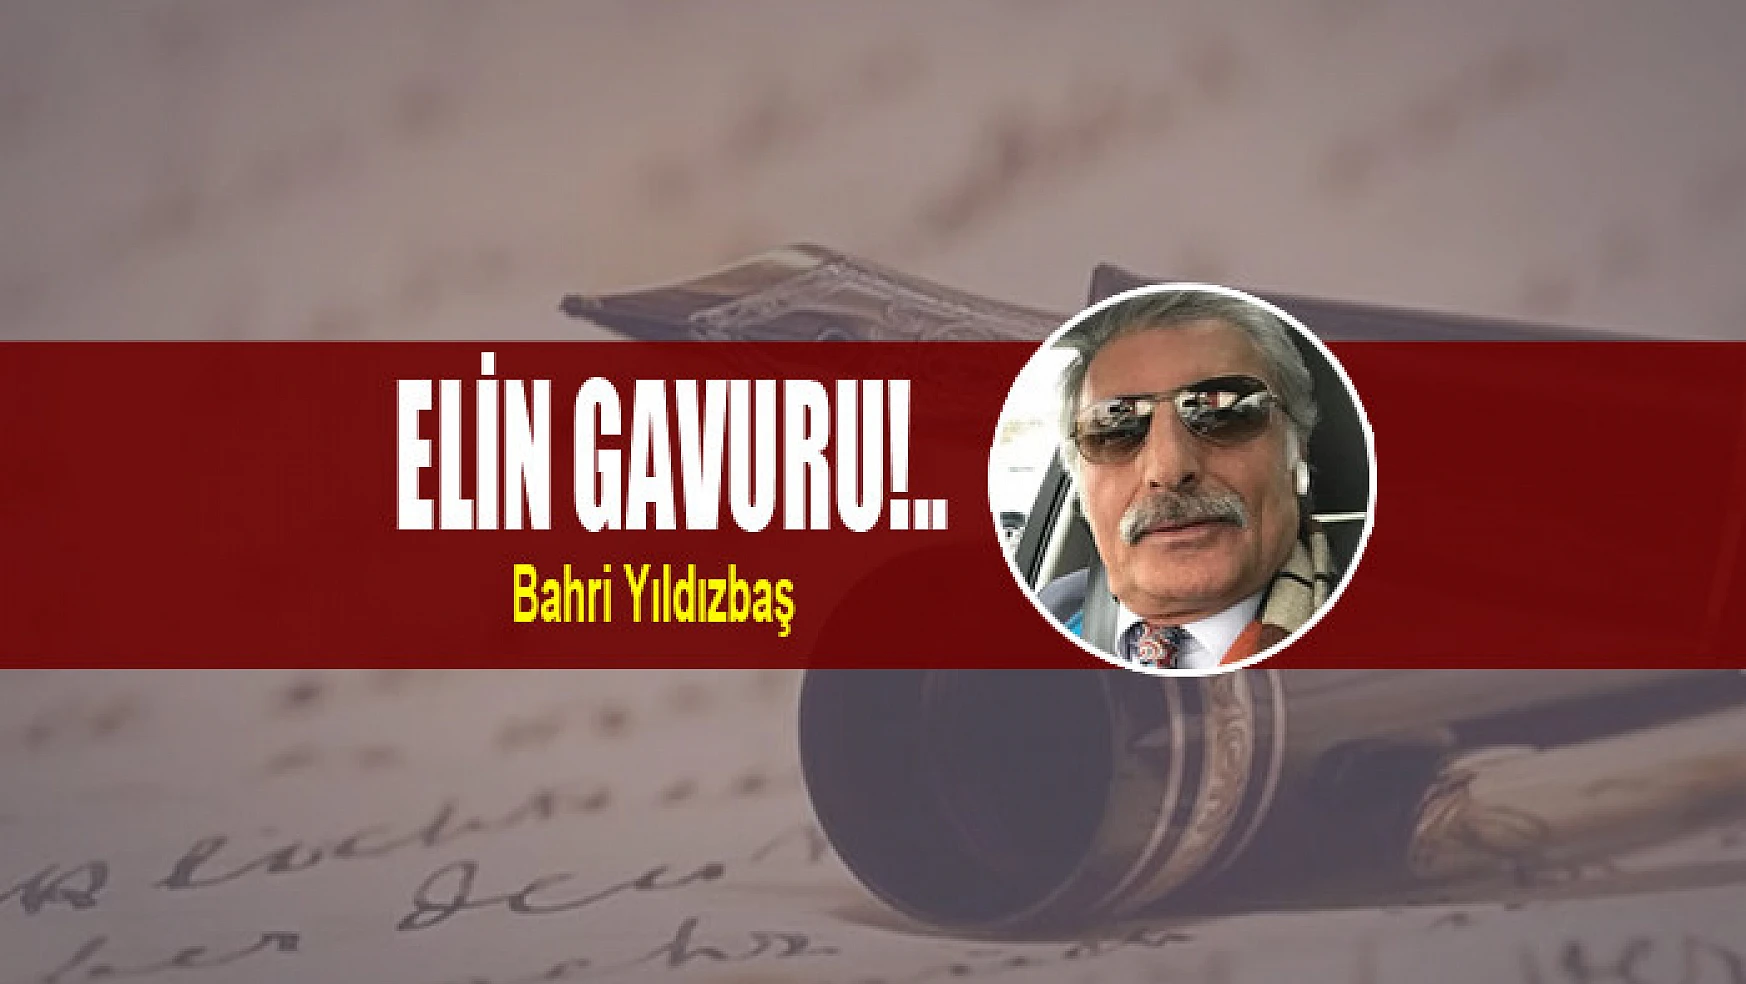 ELİN GAVURU!..